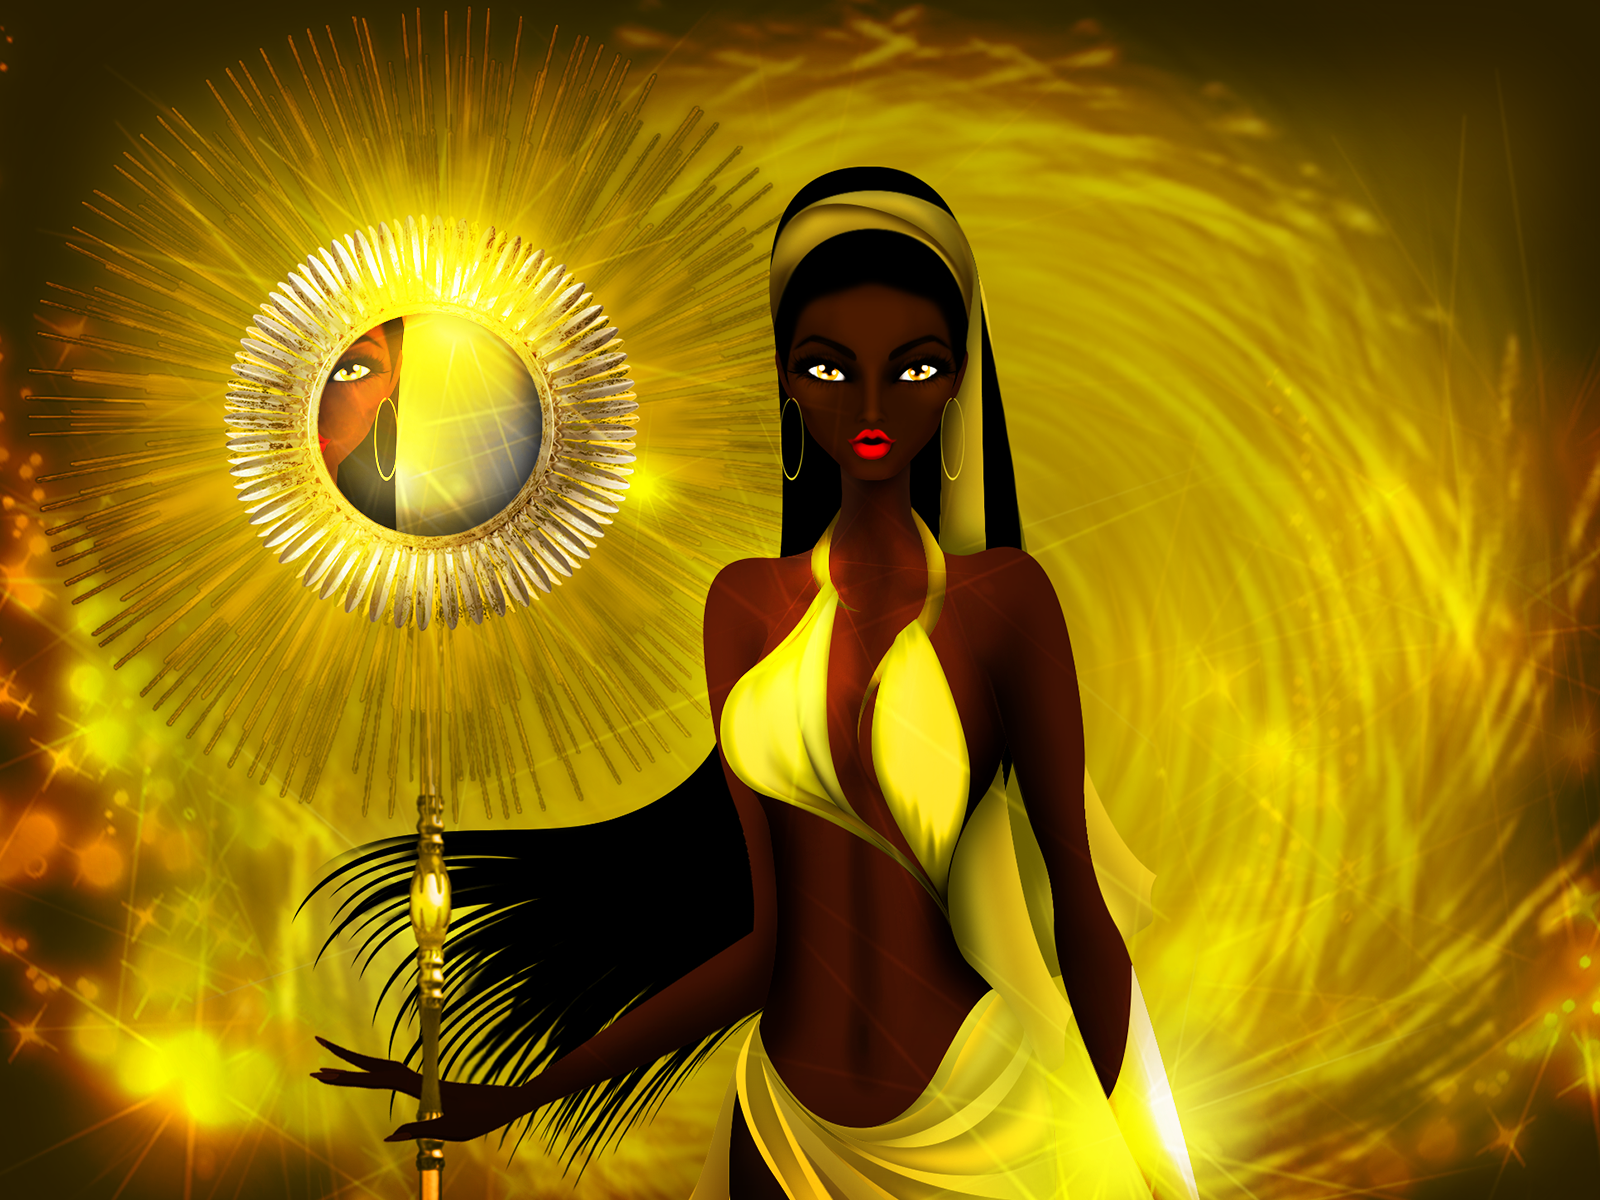 Oshun Yoruba Goddess of Beauty, The Sun and Gold designed by Jorge Ochoa. 